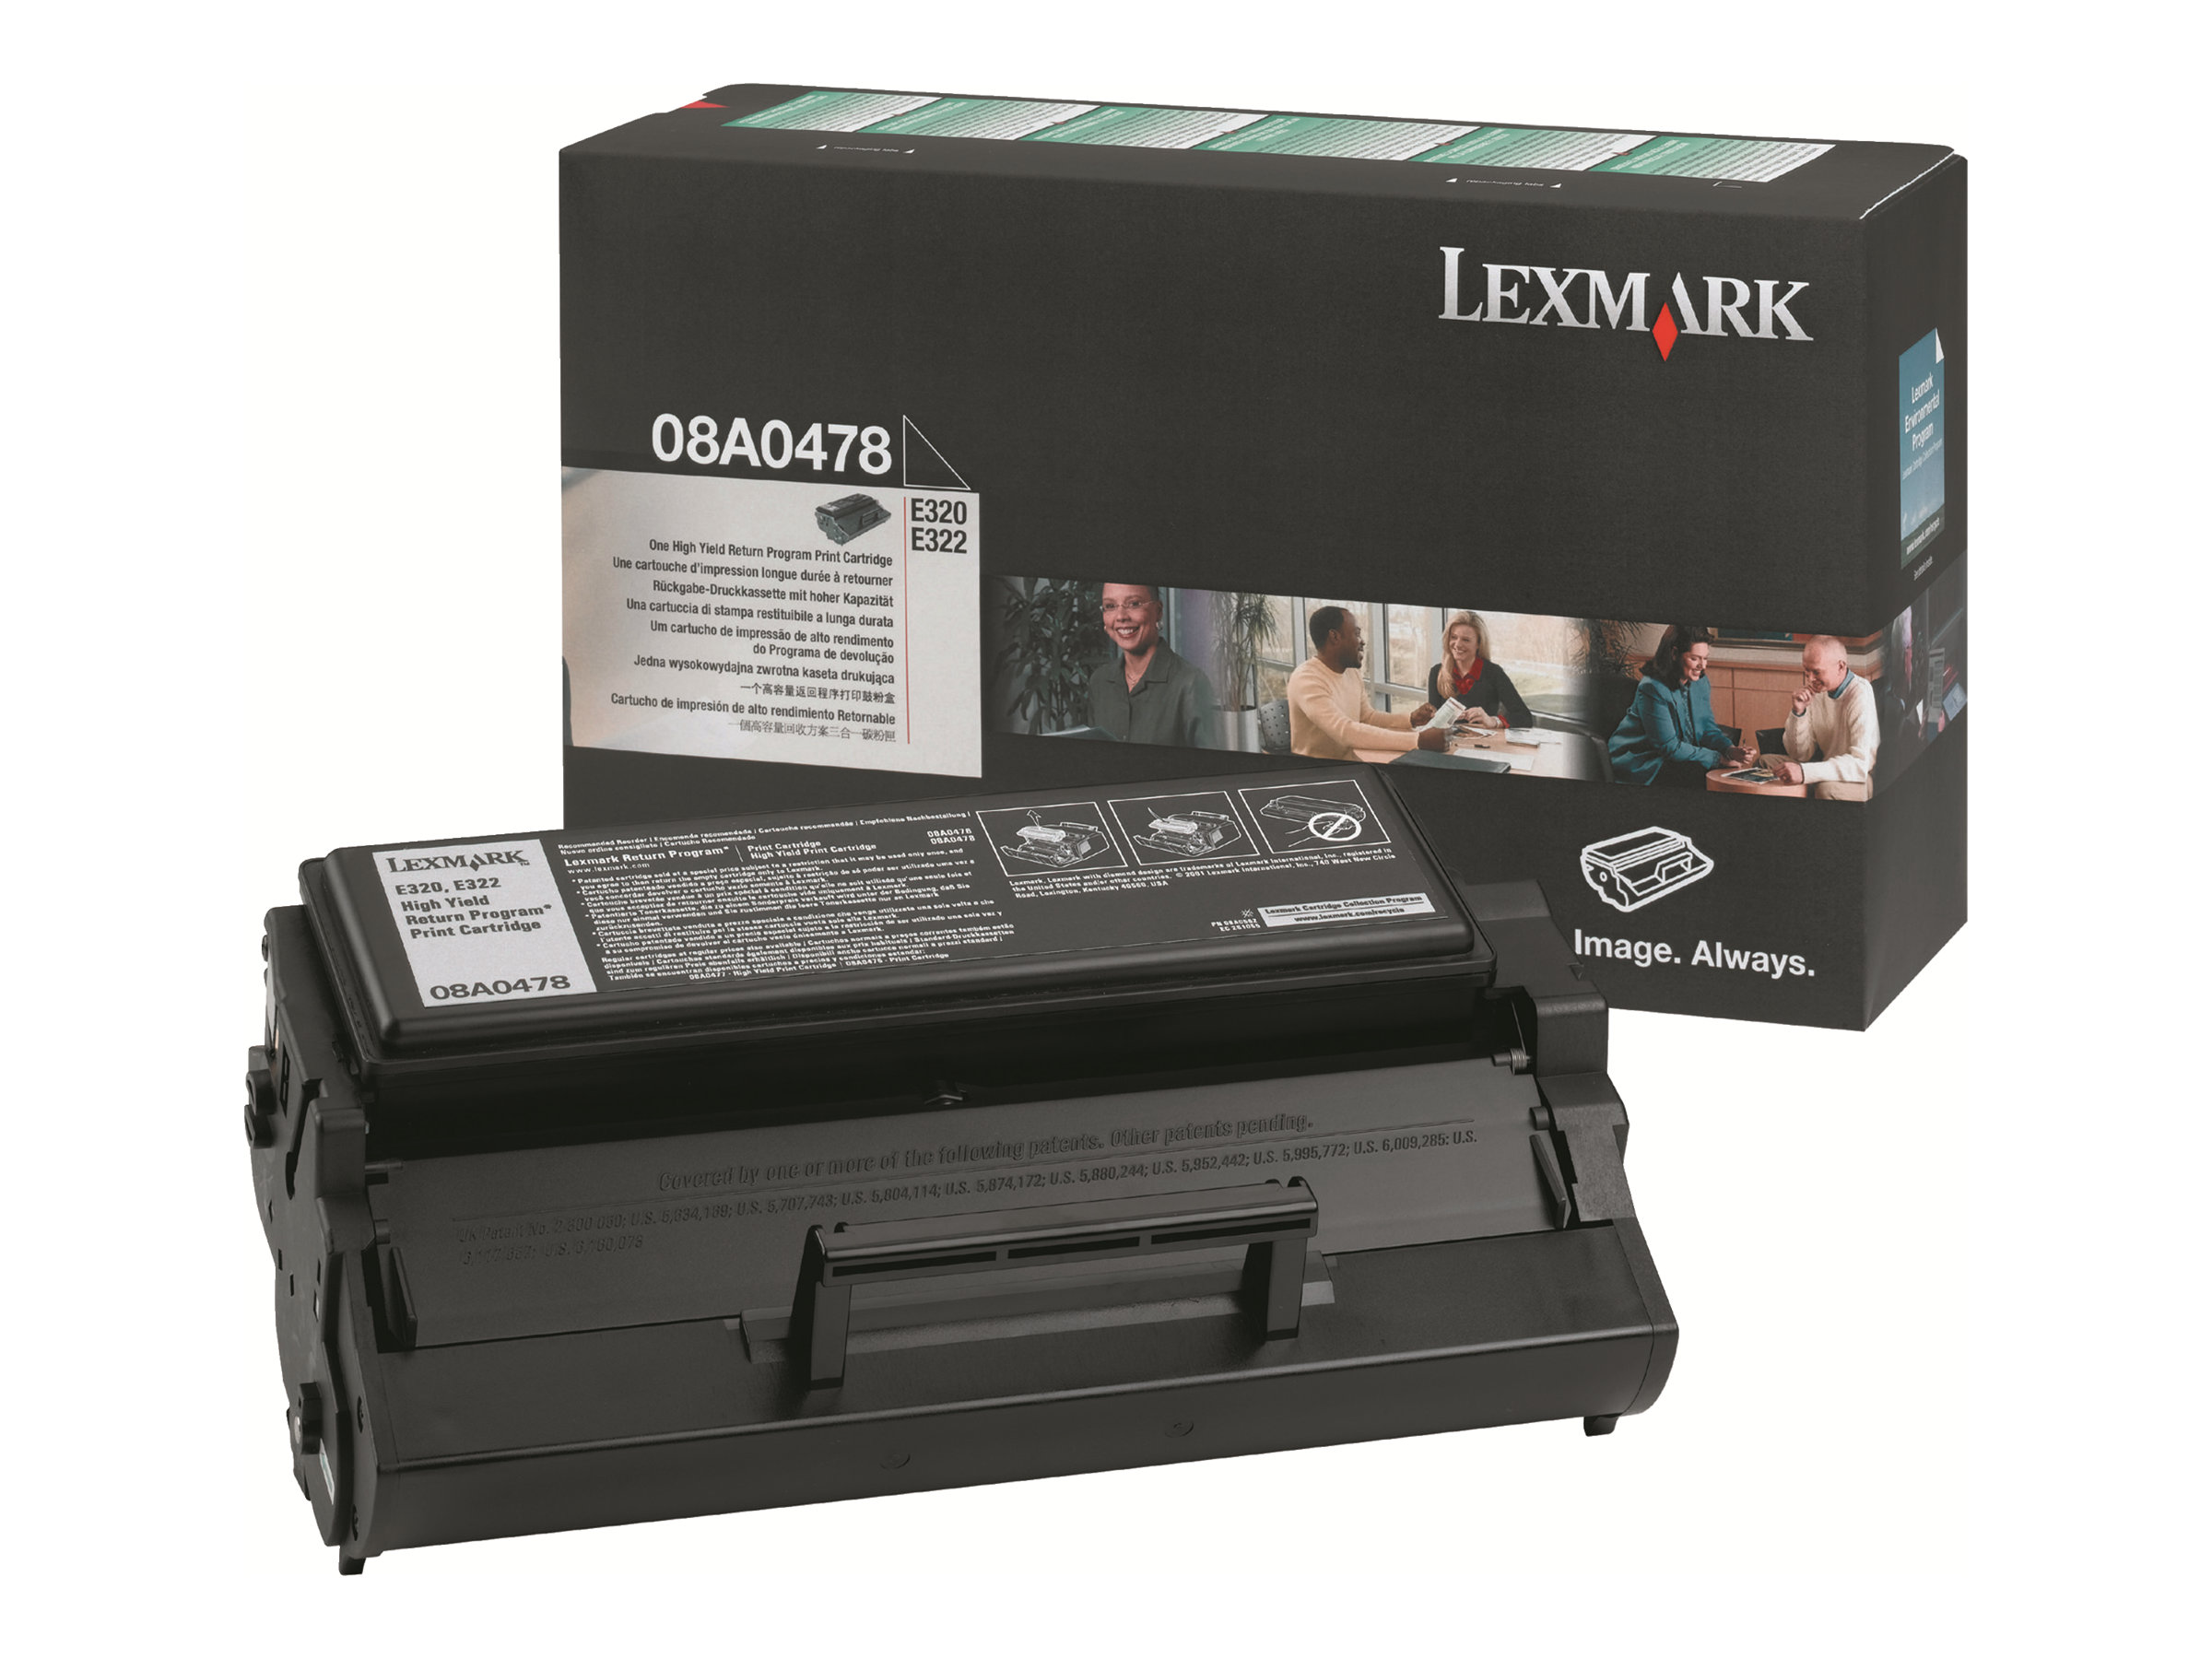 Lexmark 08A0478 toner cartridge Original Black